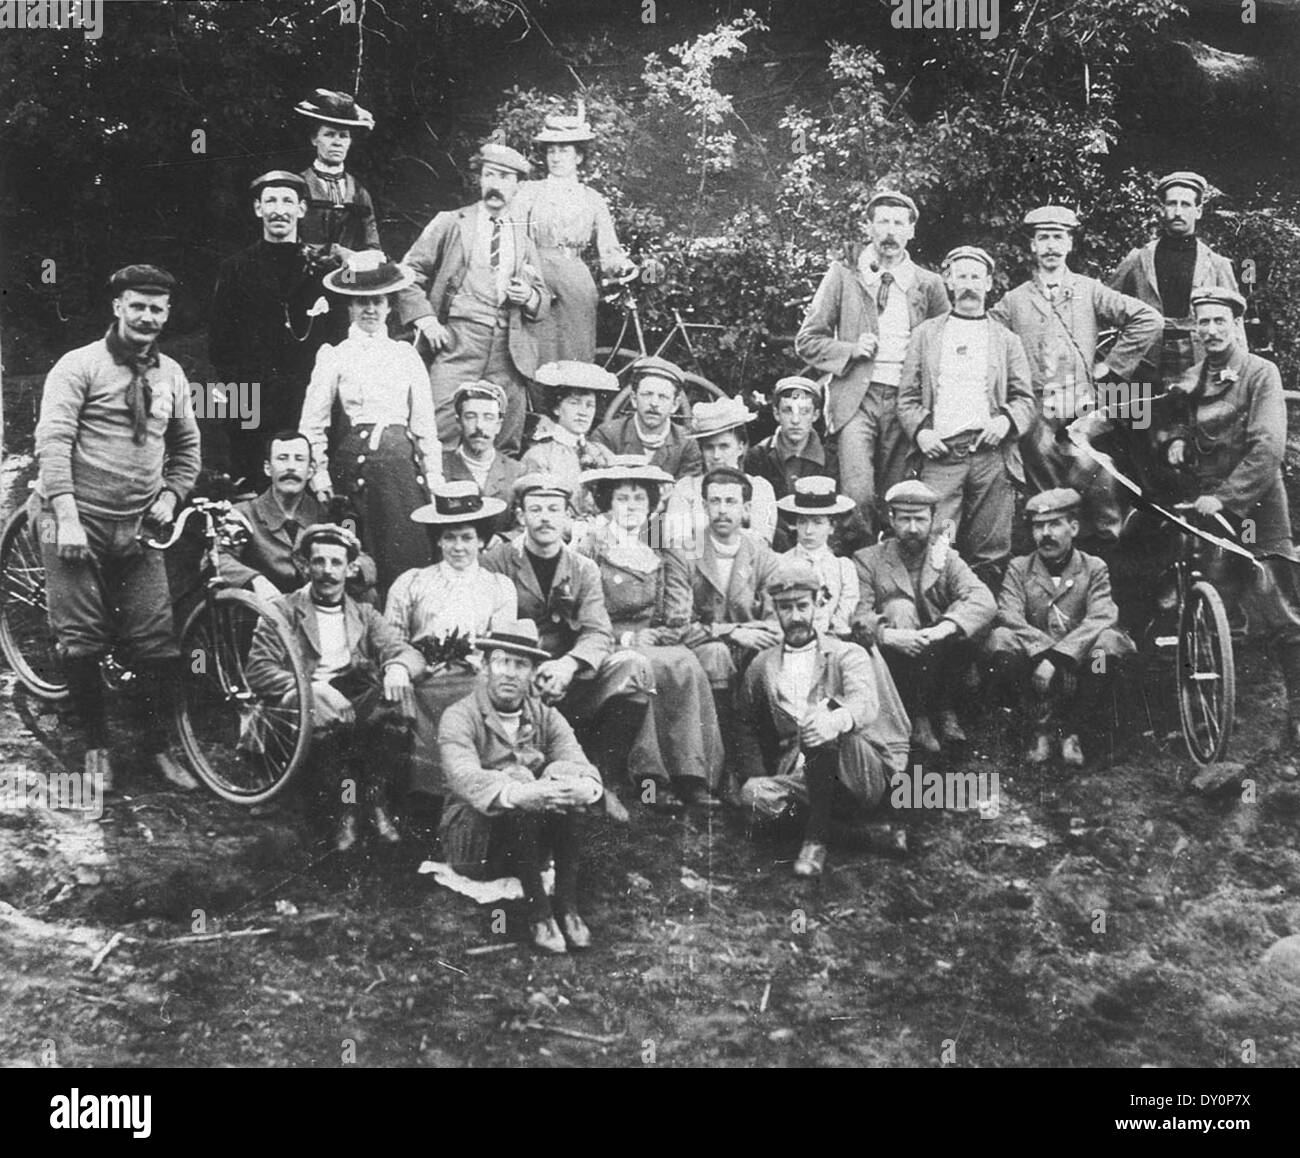 Waratah Rovers Bicycle Club (WRBC) in tour. Sydney - Campbelltown - Appin - Bulli - Costa Sud. Foto scattata a Picton - Picton, NSW, ottobre 1900 Foto Stock